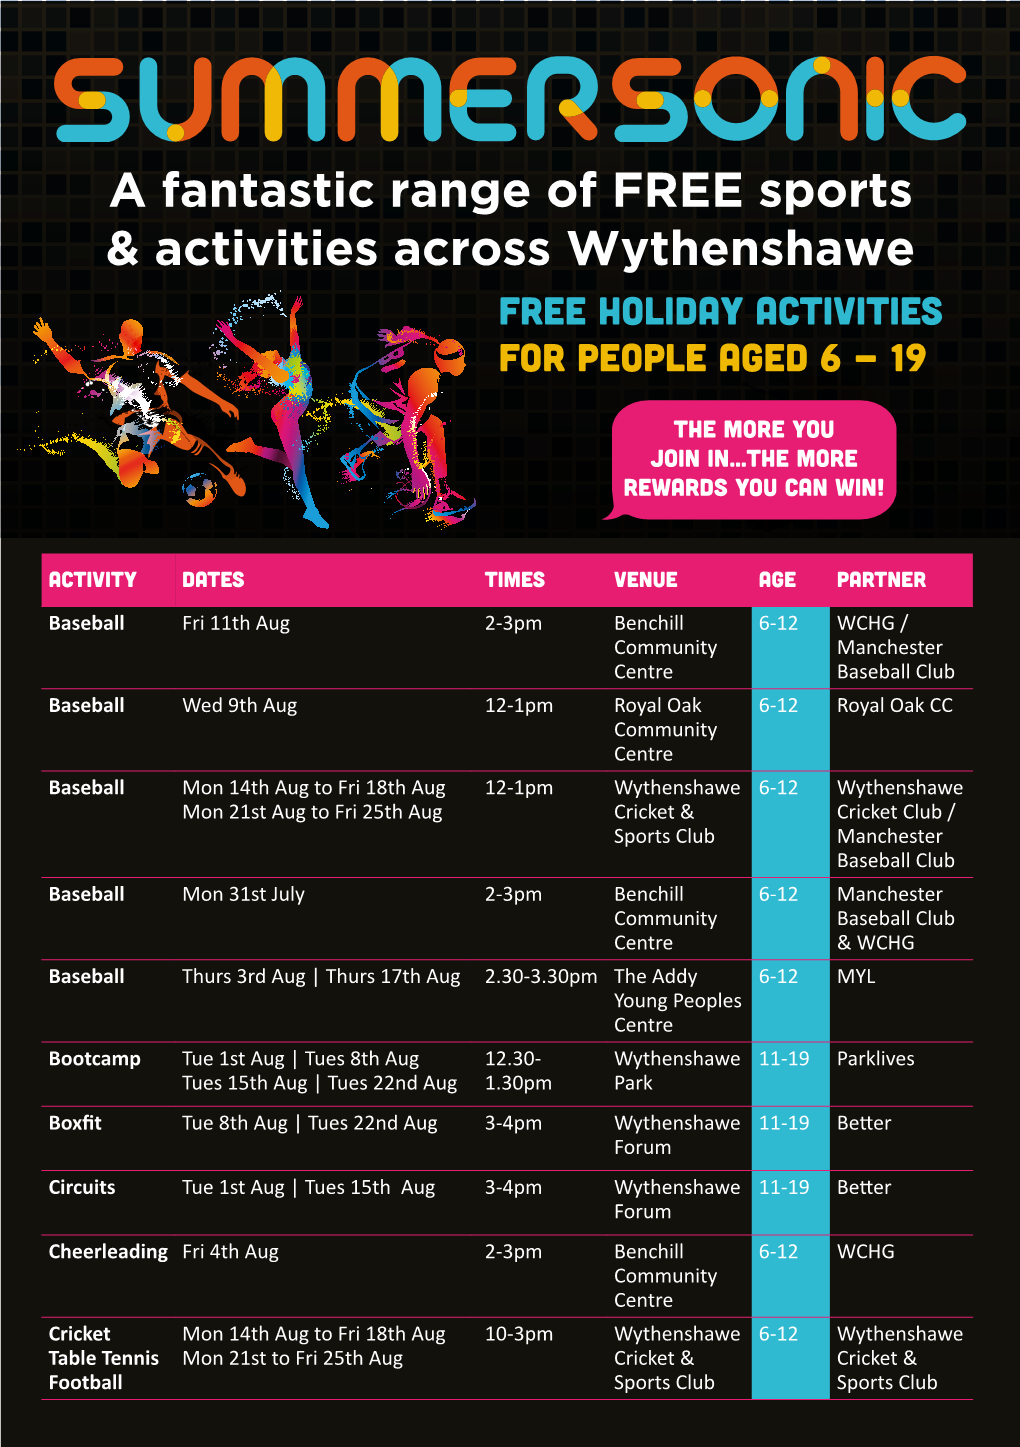 A Fantastic Range of FREE Sports & Activities Across Wythenshawe